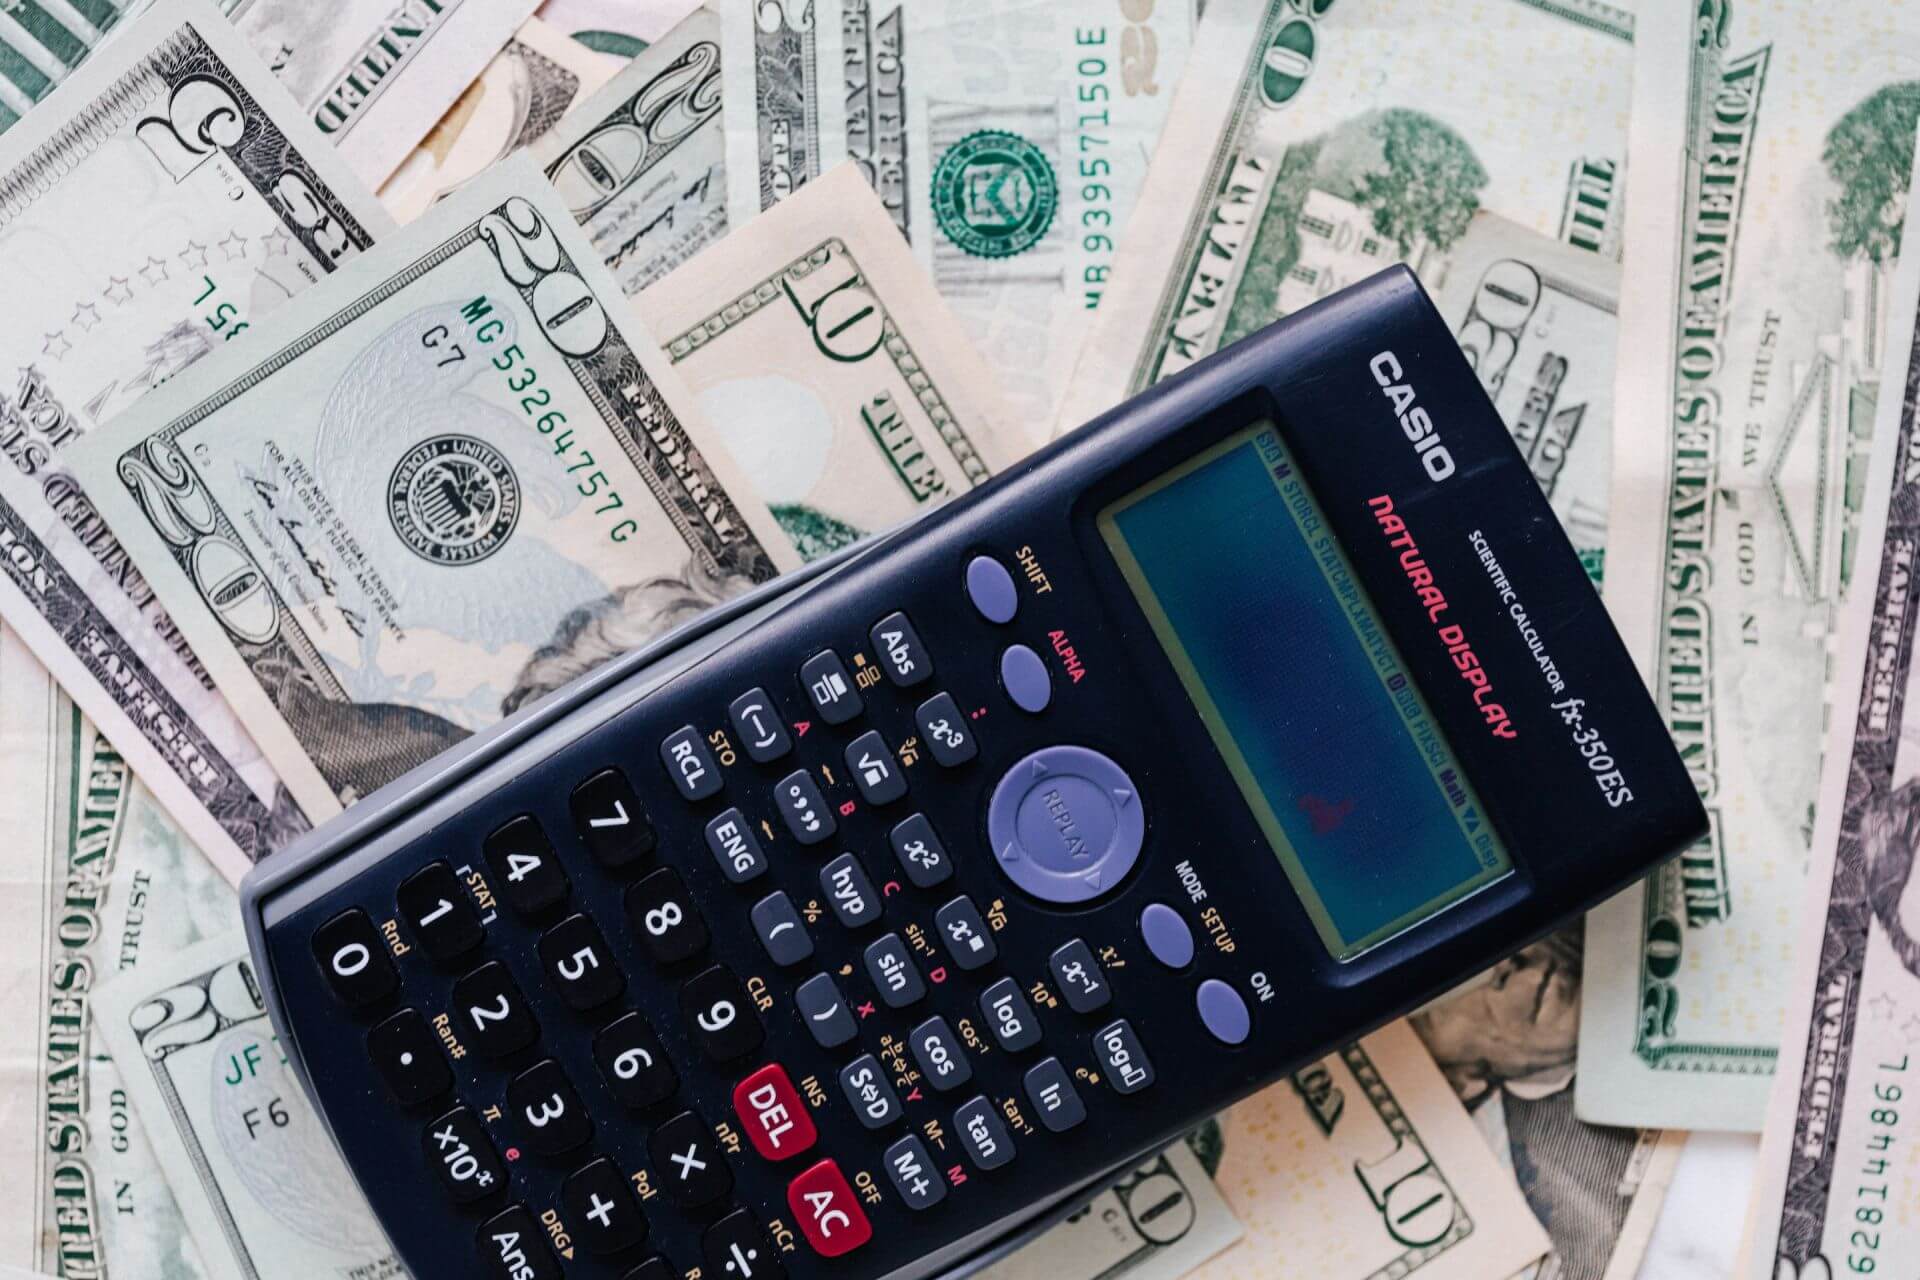 Scientific calculator on top of cash